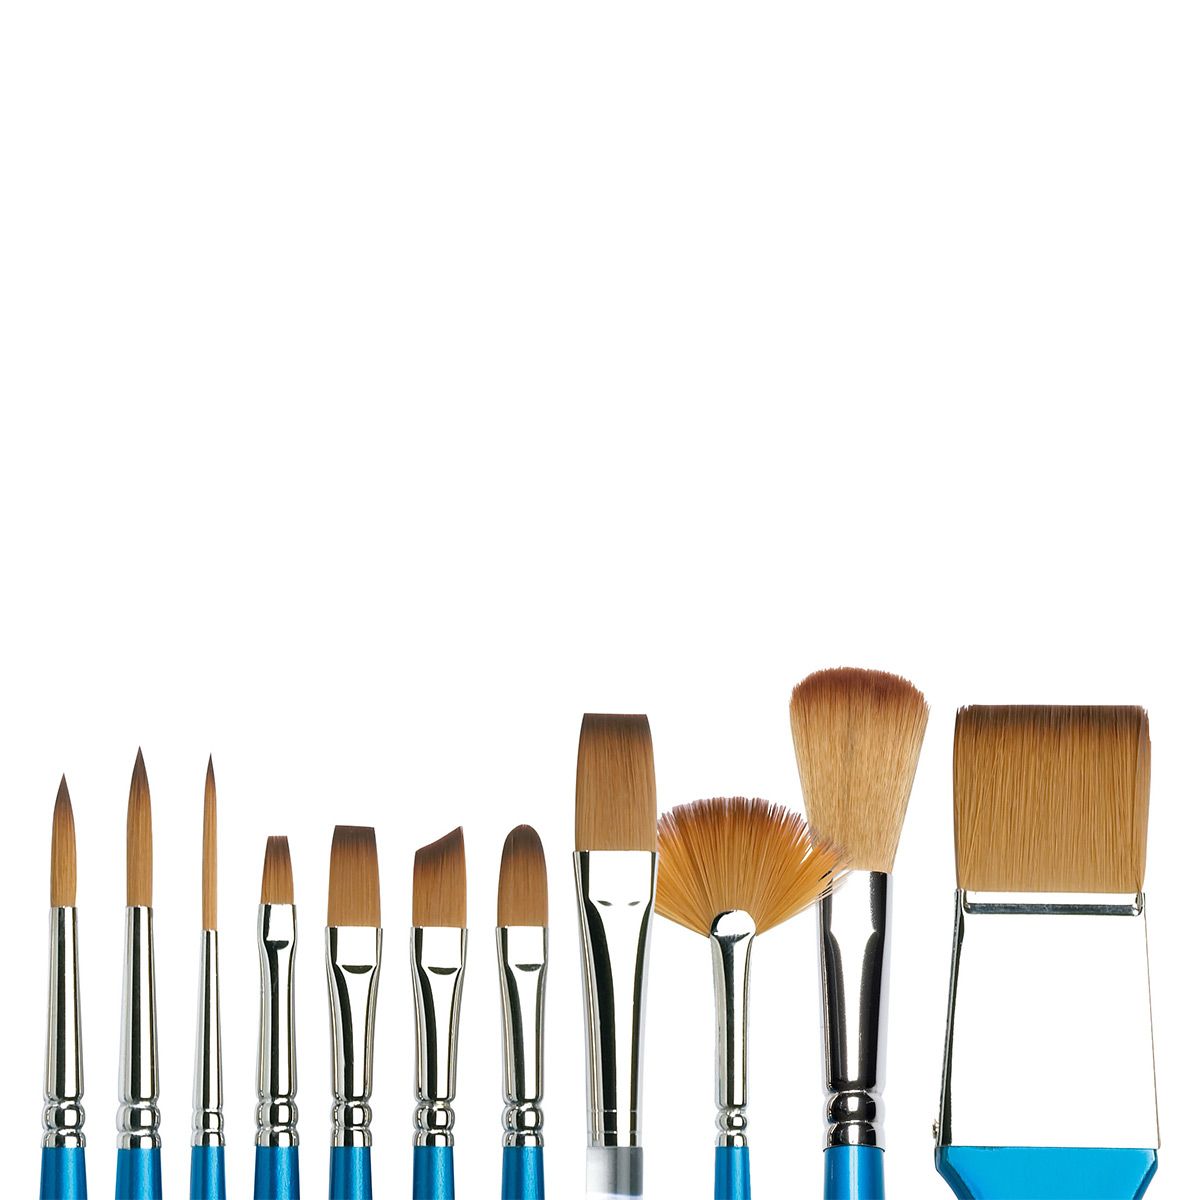 Lot of 5 varies size Winsor & Newton Cotman level 1 watercolor paint brushes